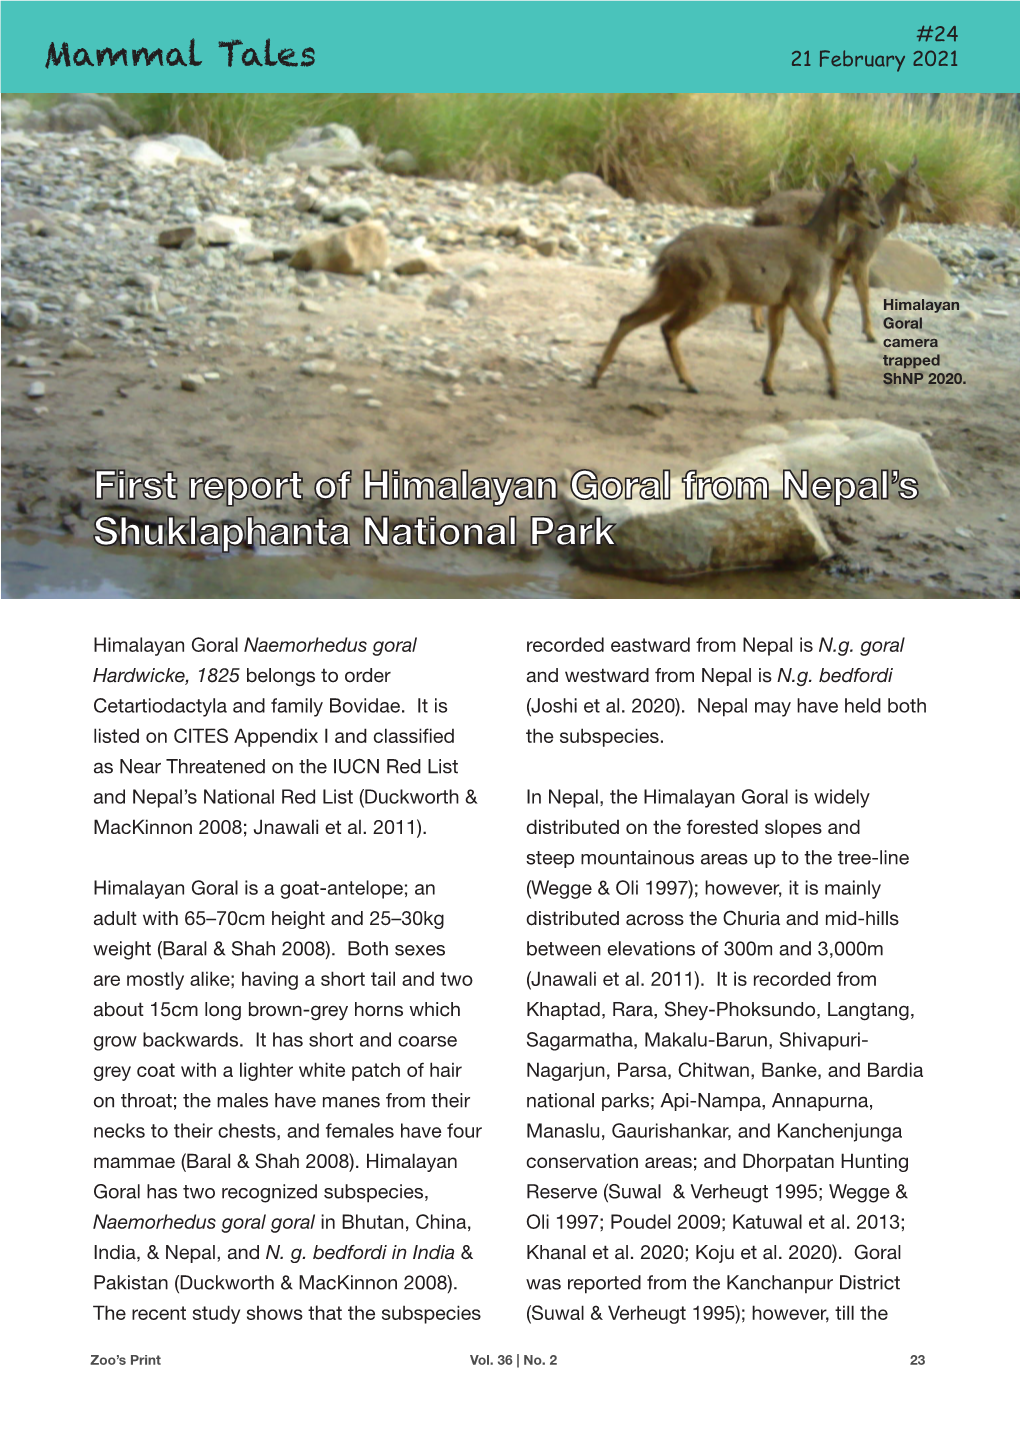 First Report of Himalayan Goral from Nepal's Shuklaphanta National Park